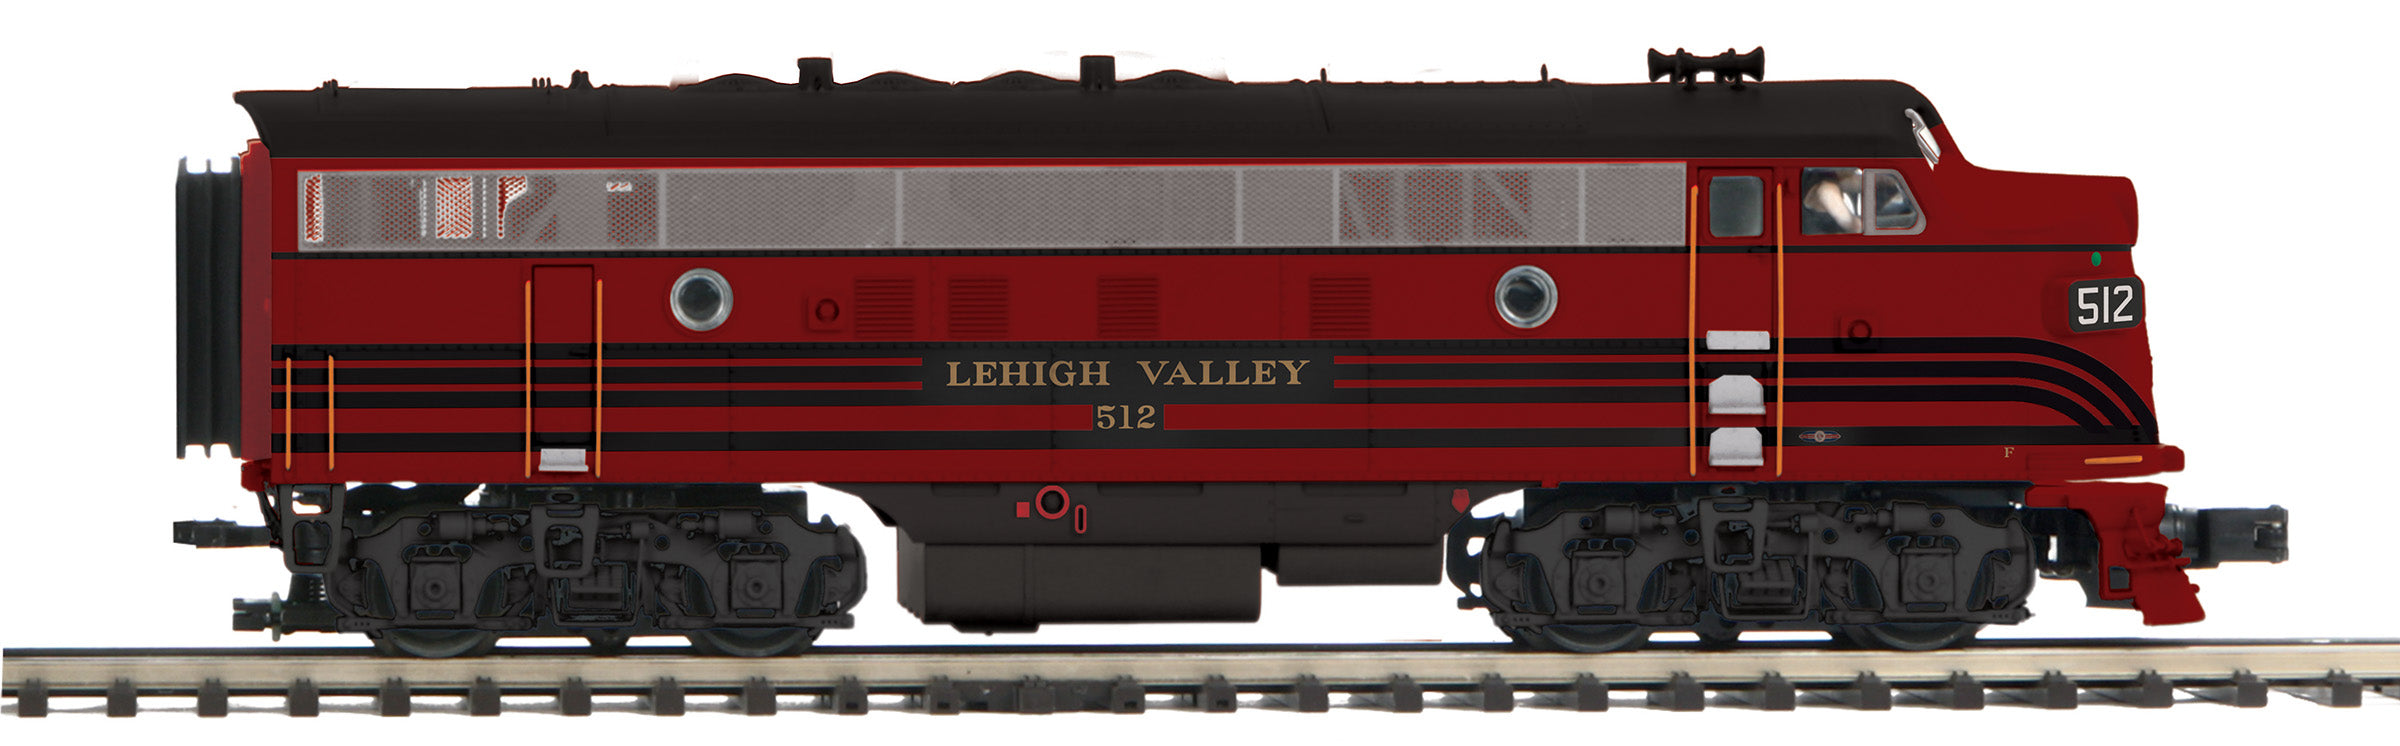 MTH 20-21595-1 - F-3 A Unit Diesel Engine "Lehigh Valley" #512 w/ PS3 (Hi-Rail Wheels) - Custom Run for MrMuffin'sTrains